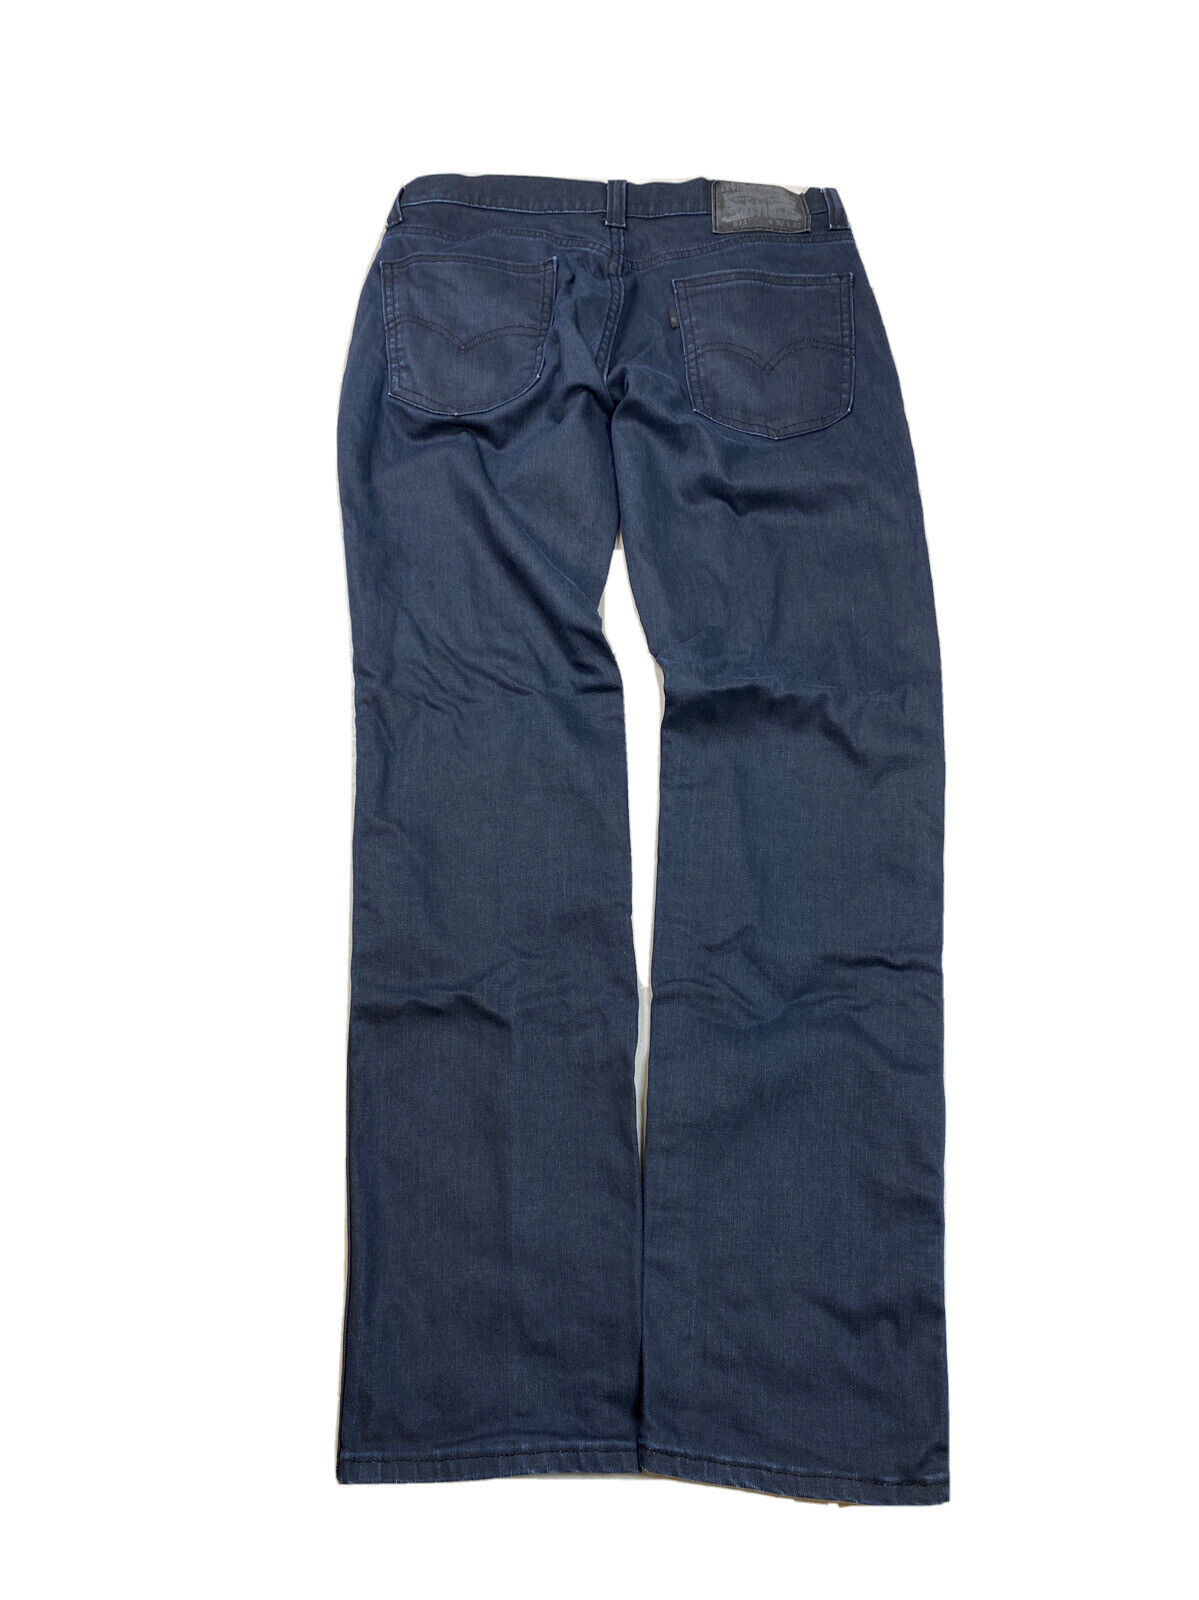 Levi's Men's Dark Blue Coated Denim 511 Slim Fit Jeans - 30x32